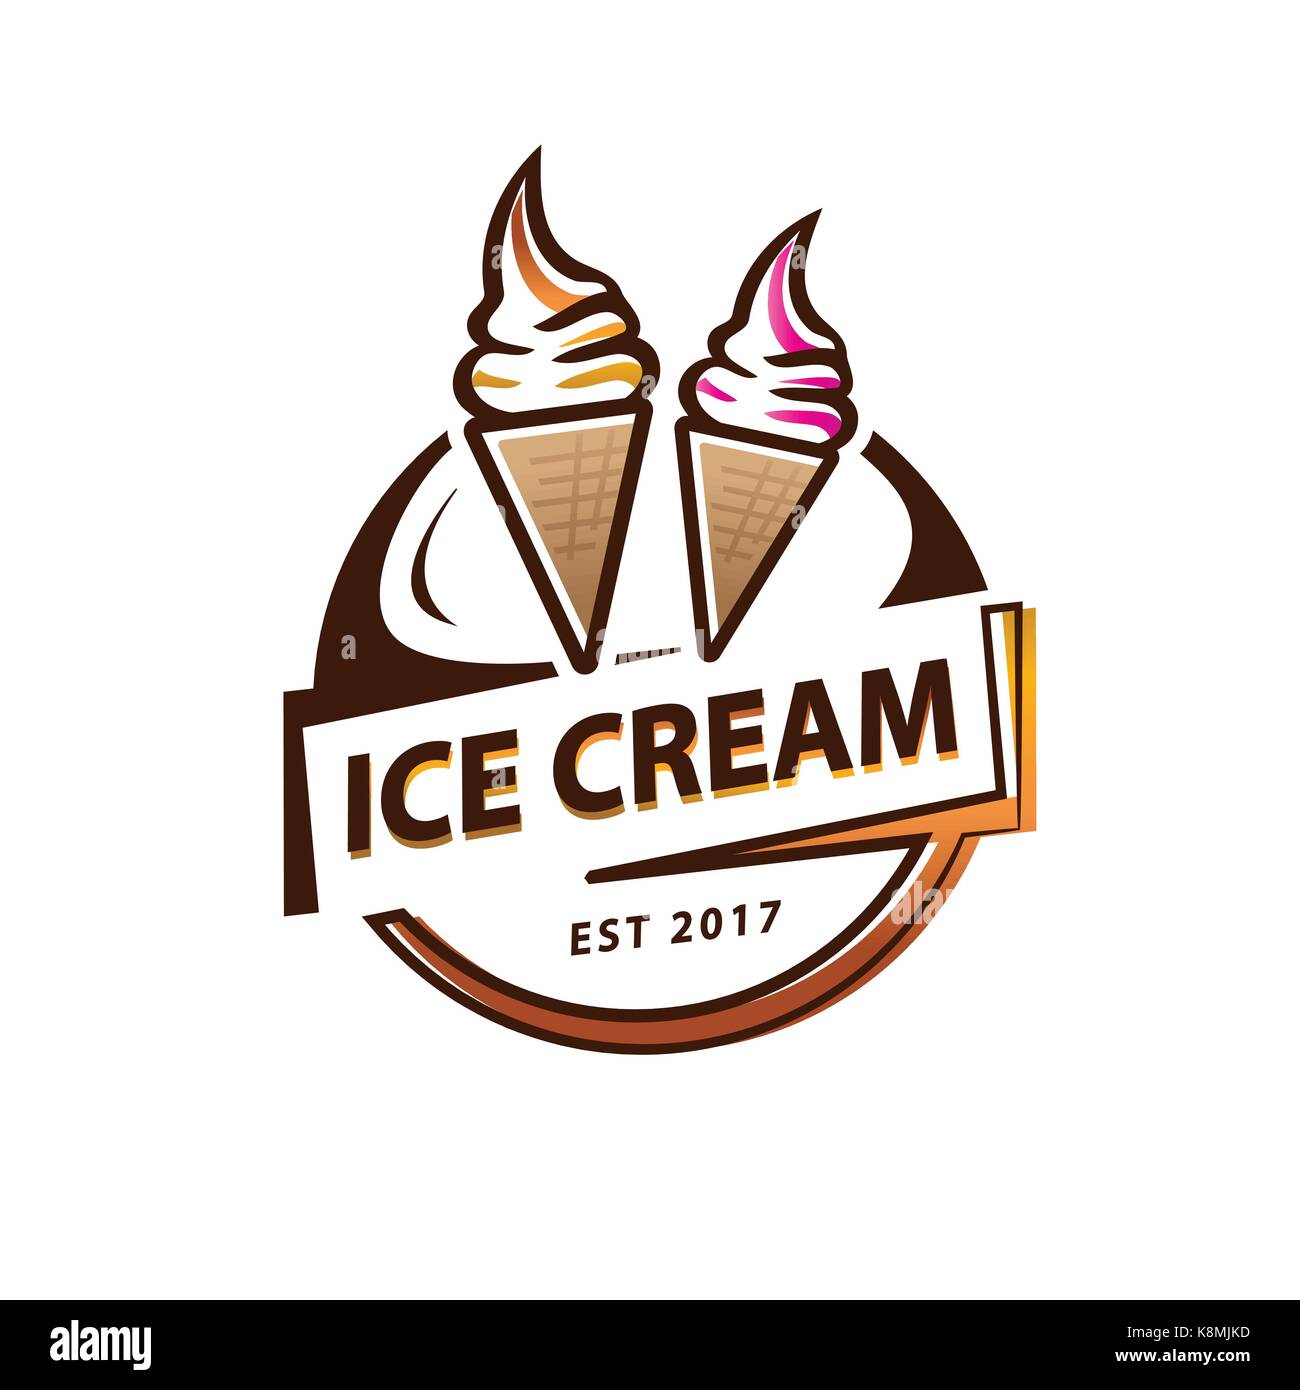 soft serve ice cream logo, circular ice cream logo, illustration design, isolated on white background. Stock Vector